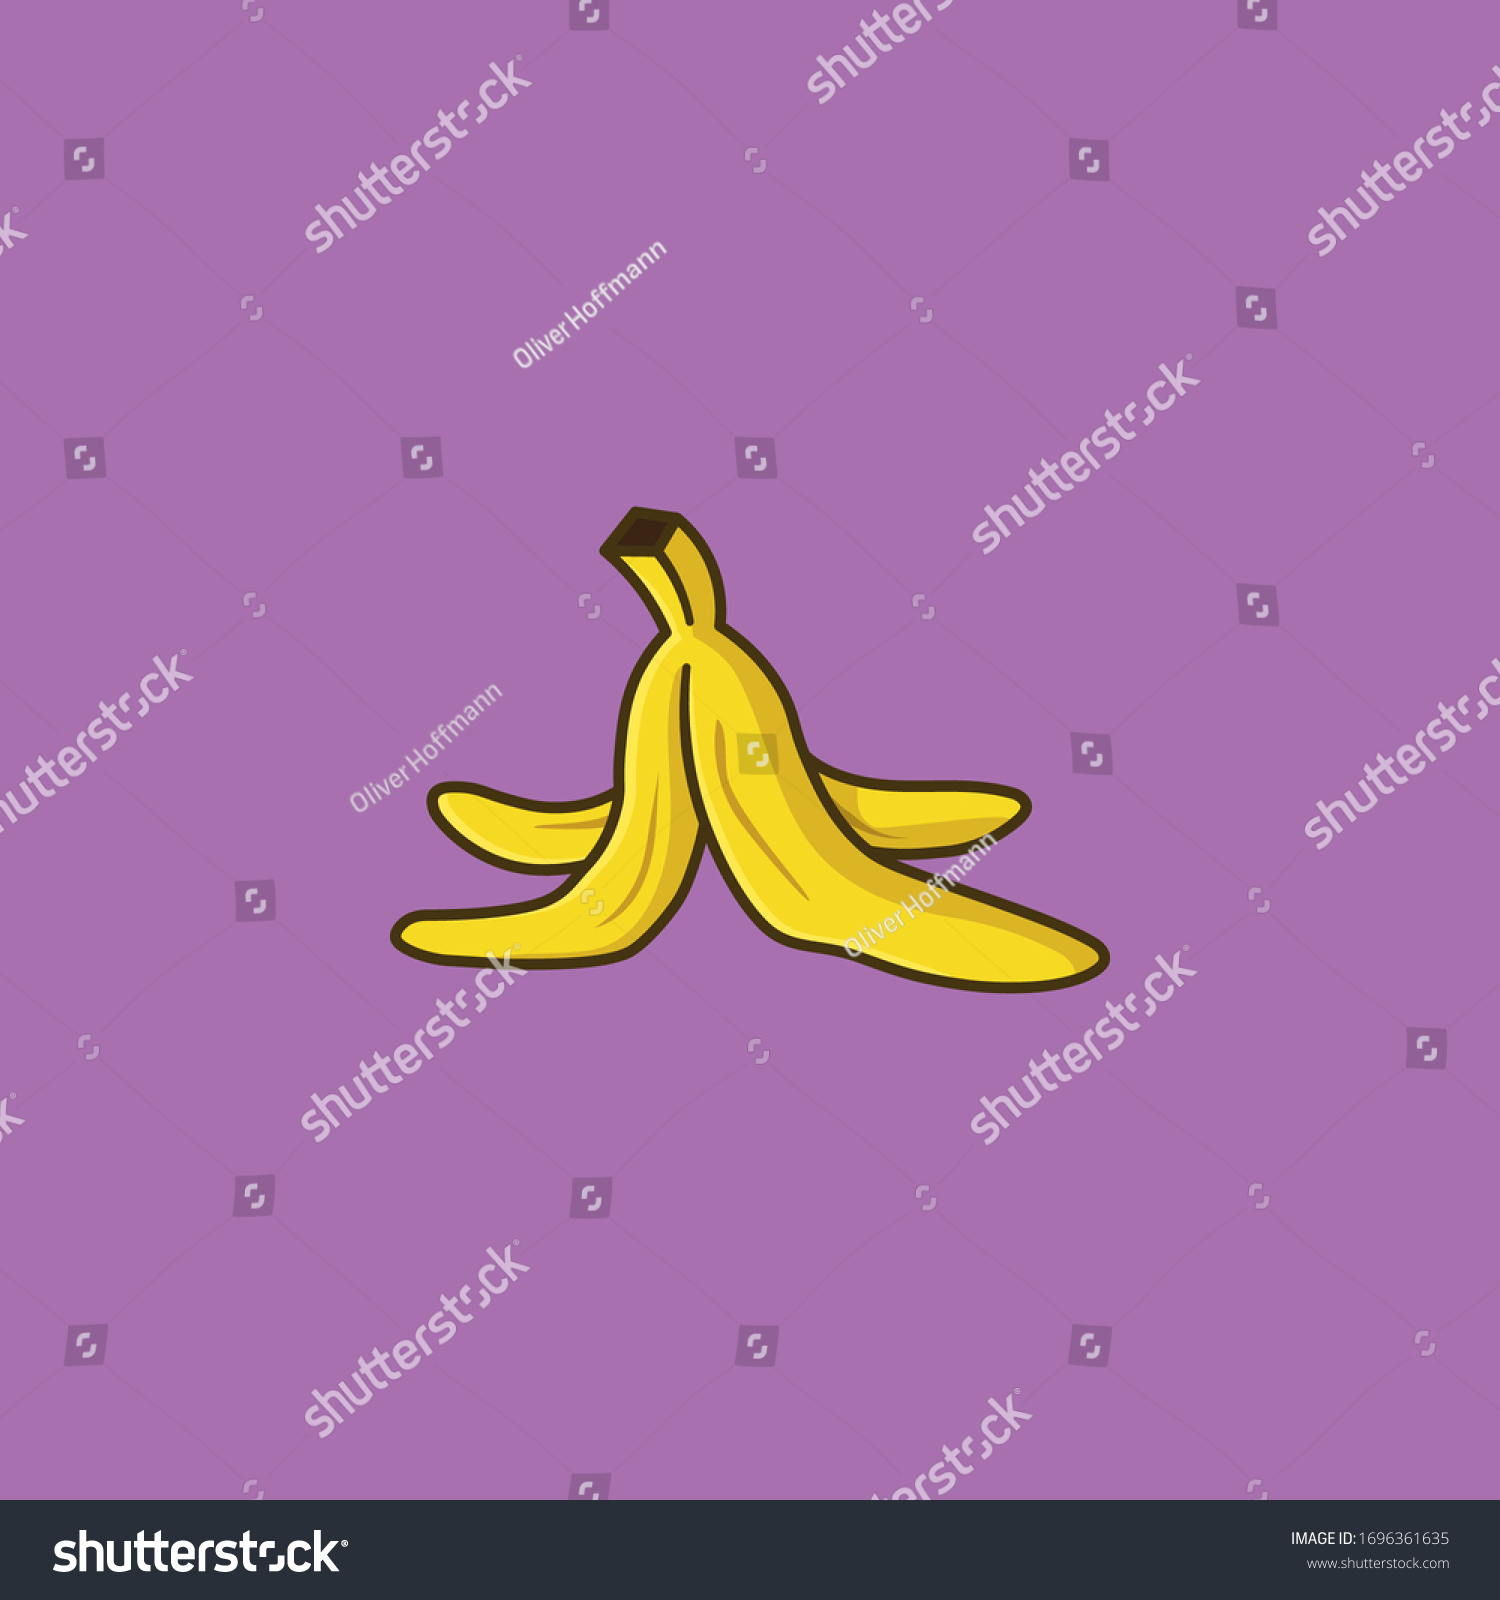 Banana Skin Vector Illustration For ´banana Day Royalty Free Stock Vector 1696361635 